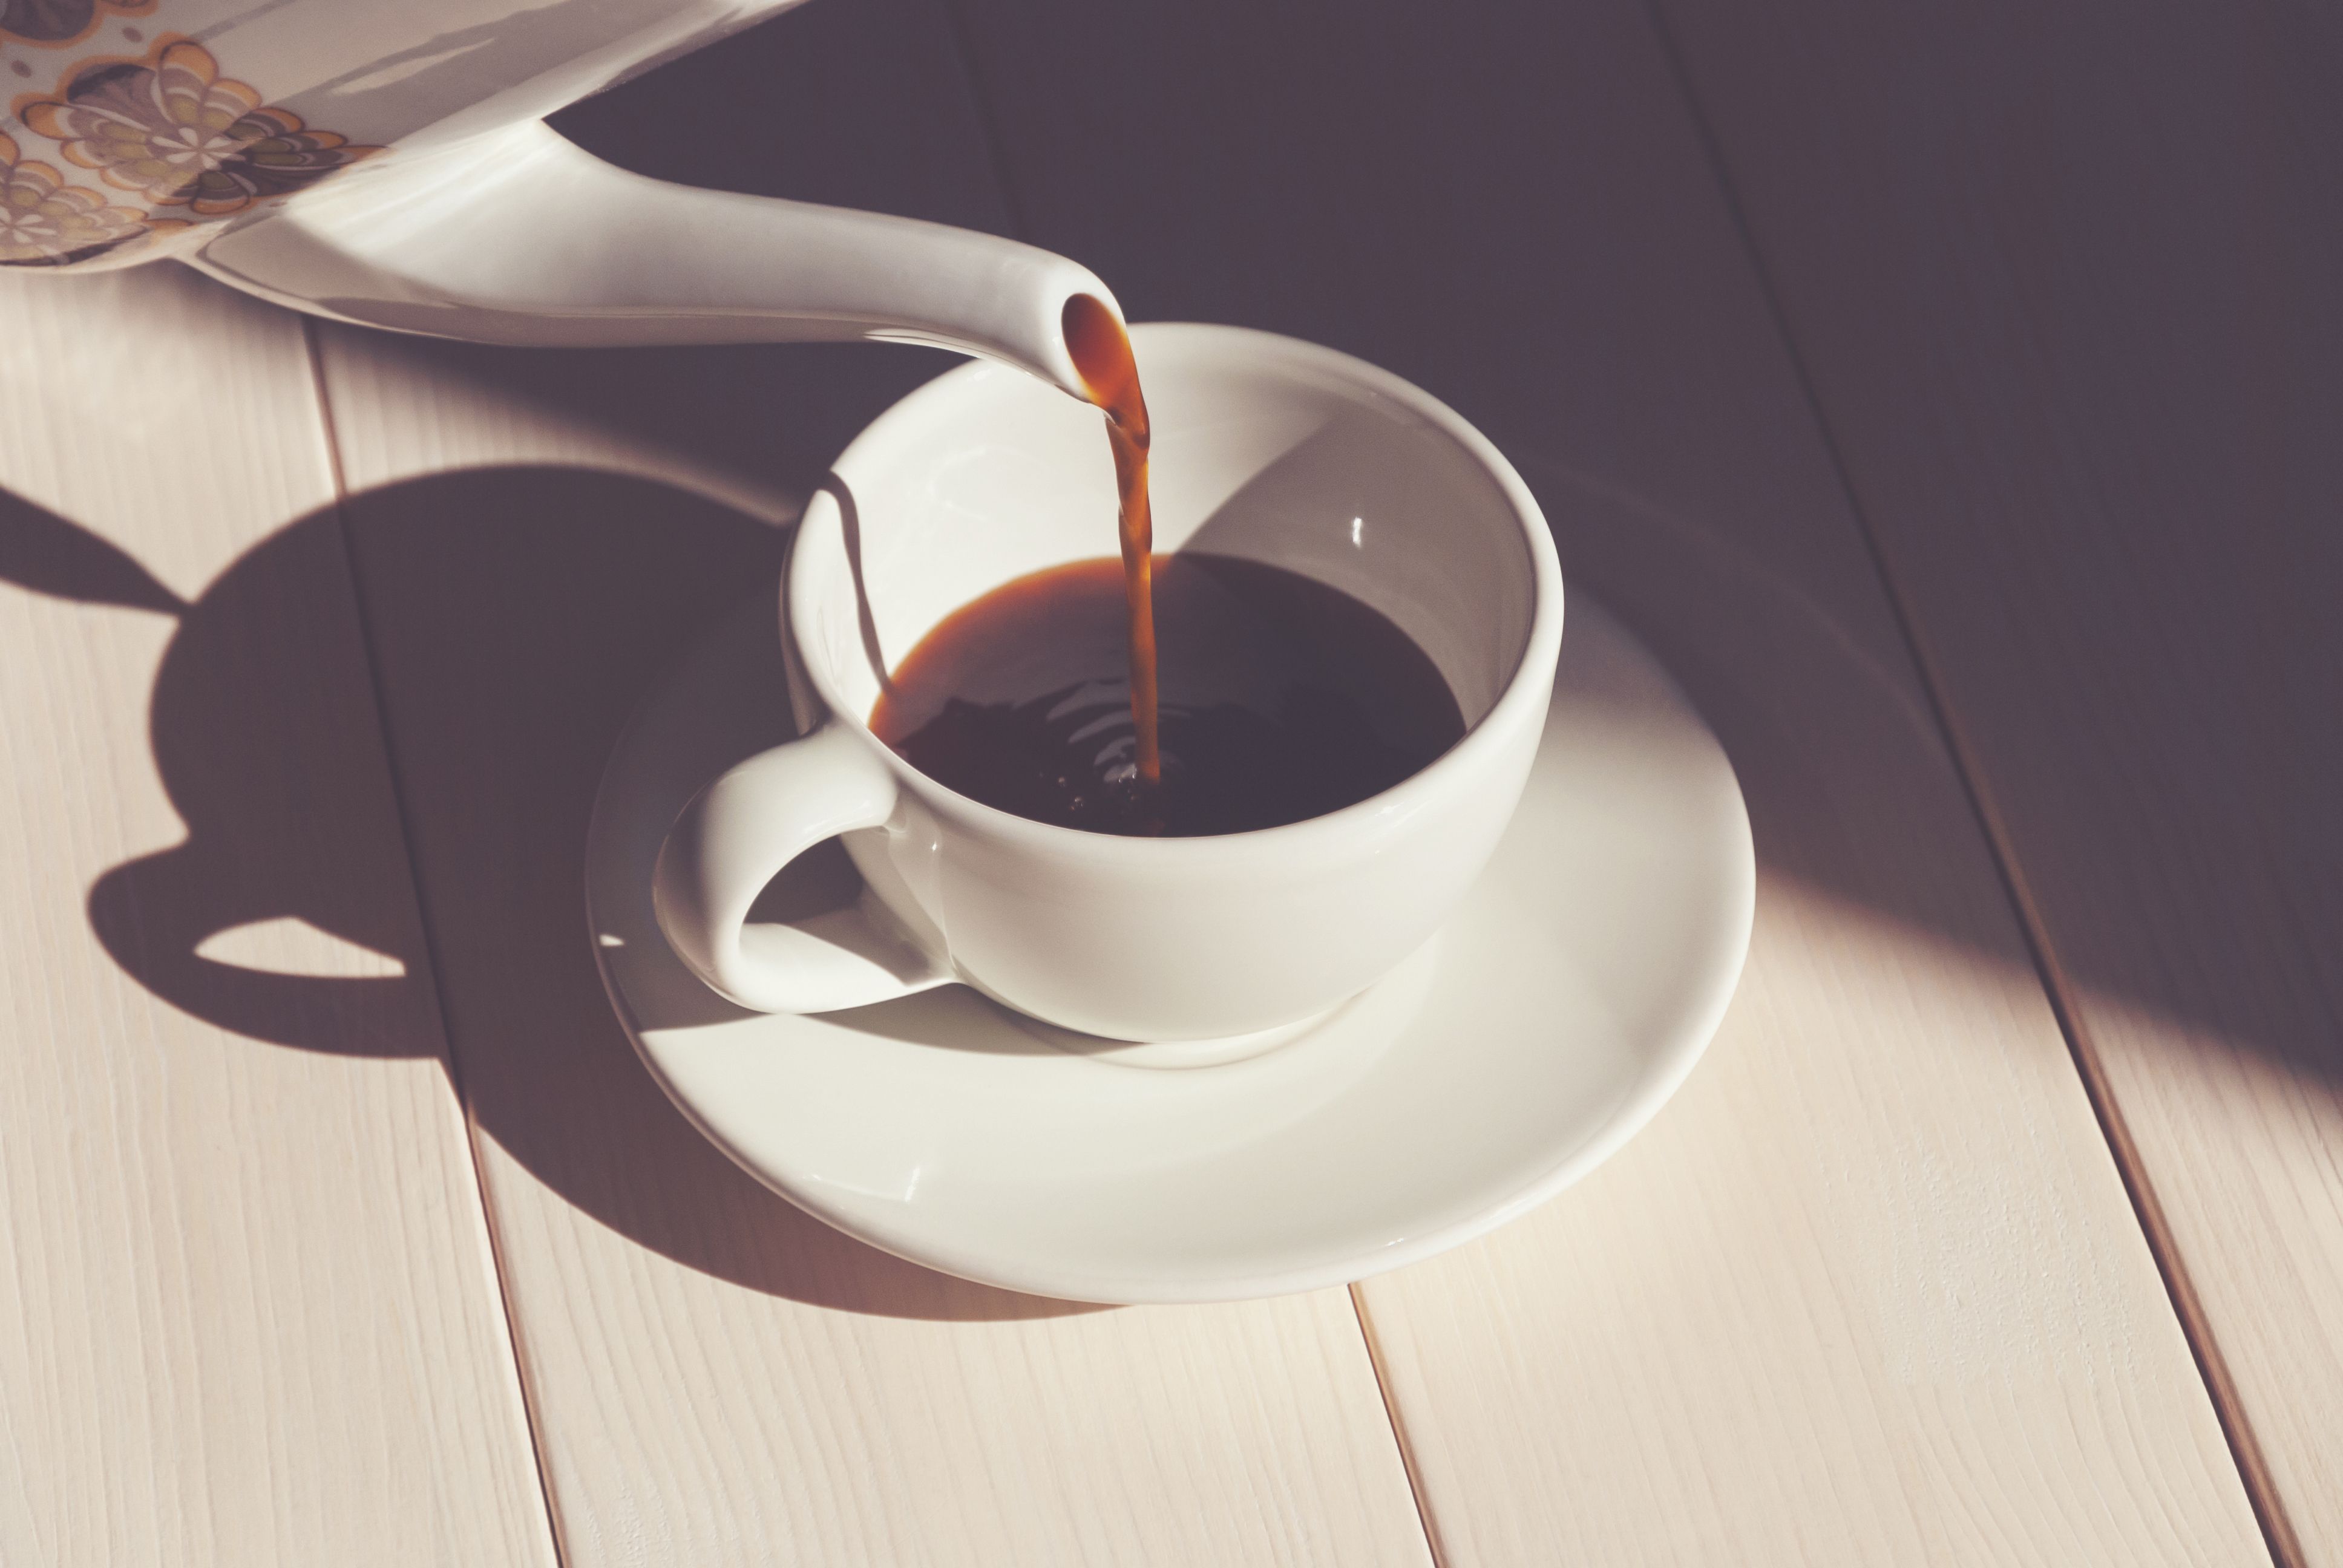 Beber mucho café disminuye el riesgo de alzhéimer